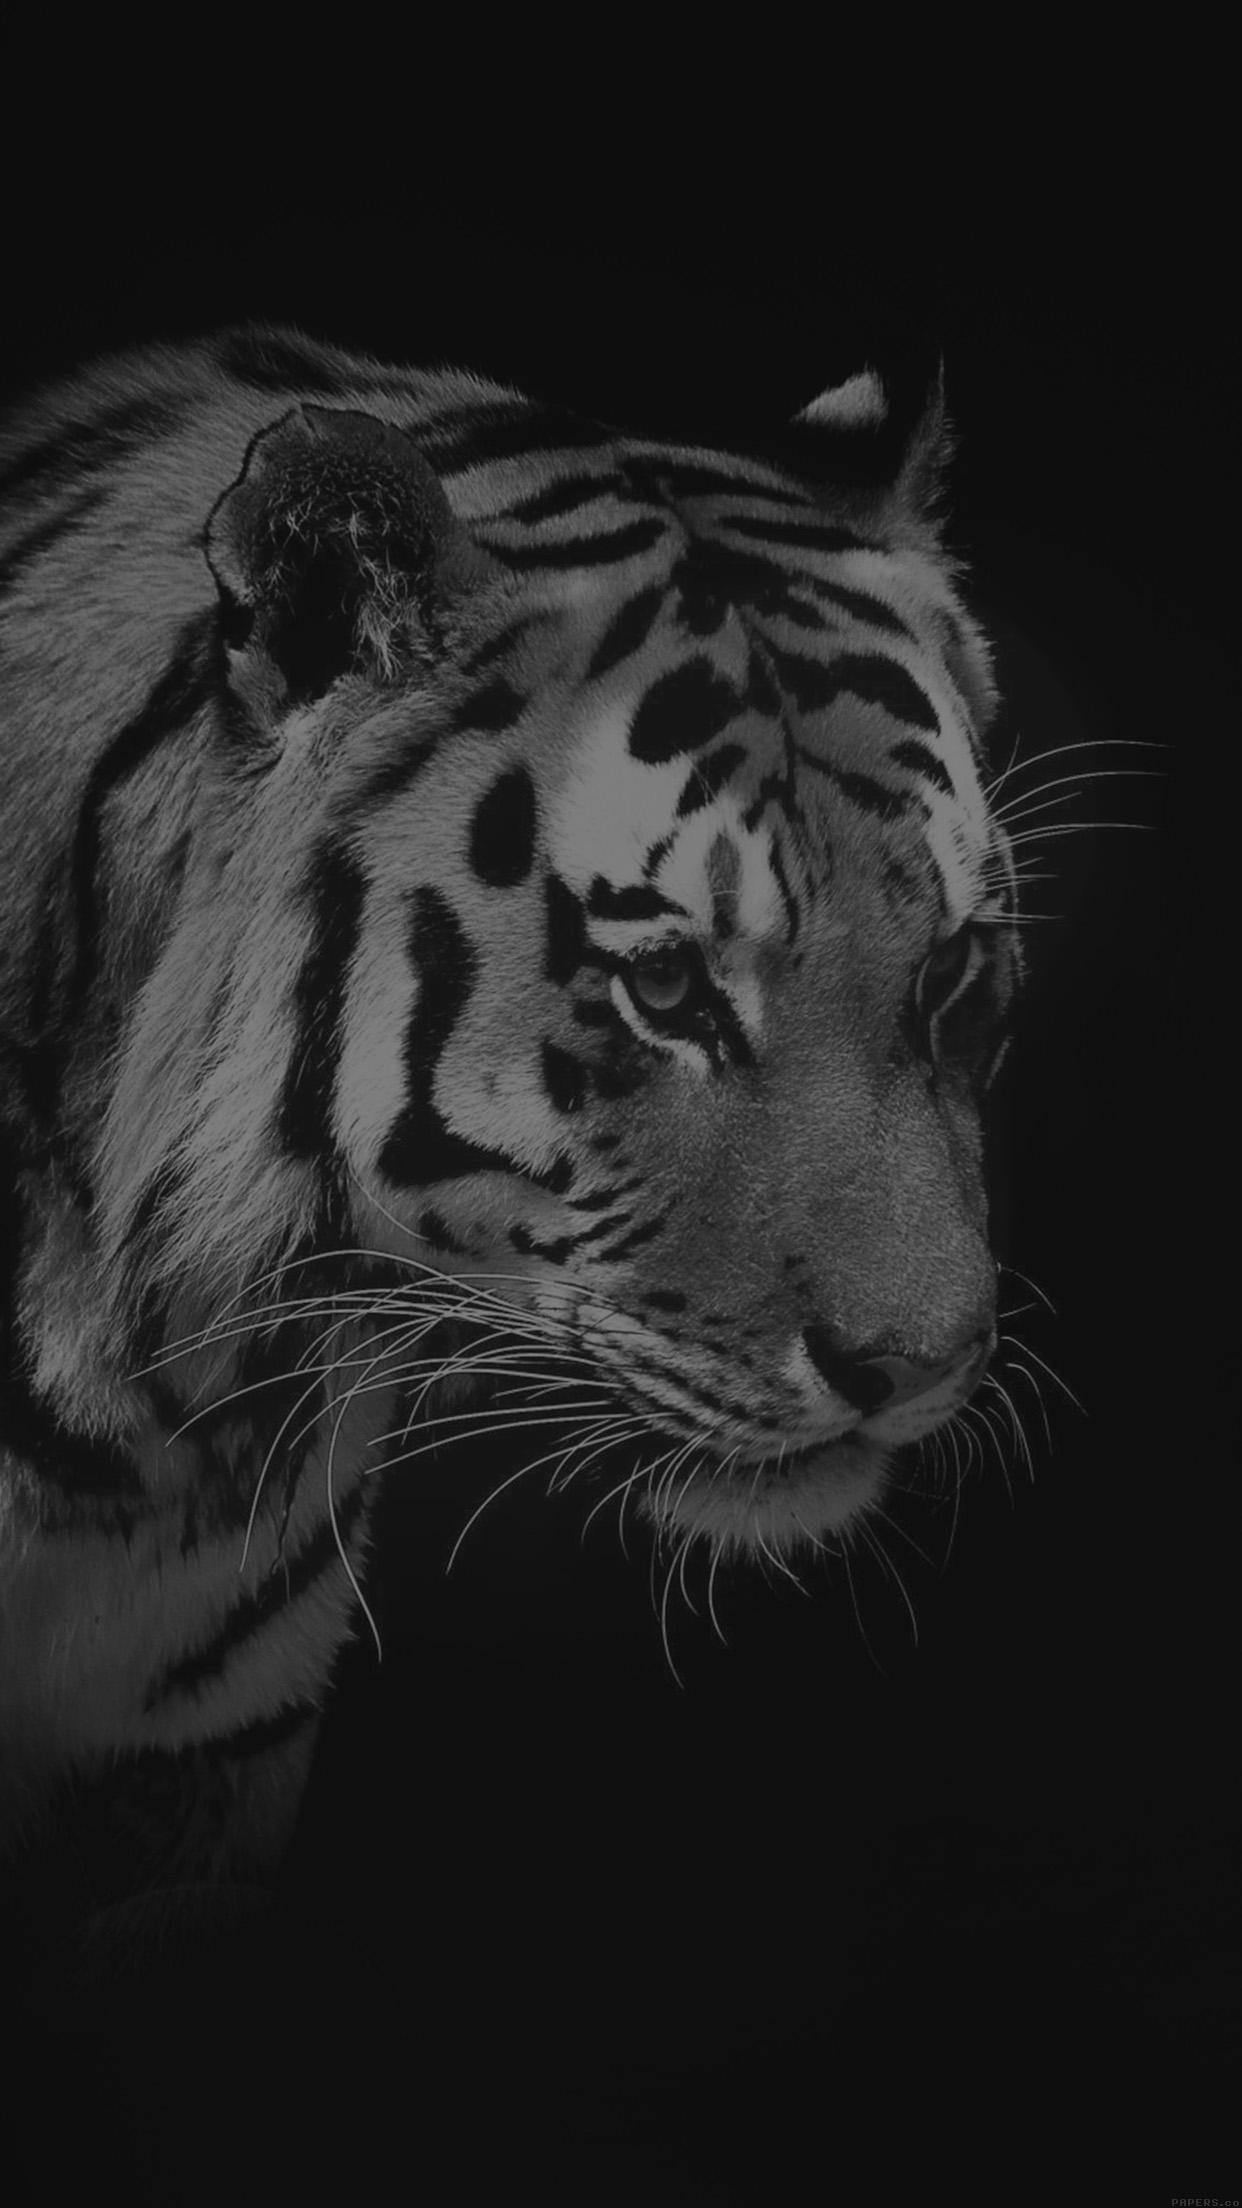 Tiger Dark Bw Animal Love Nature Android wallpaper